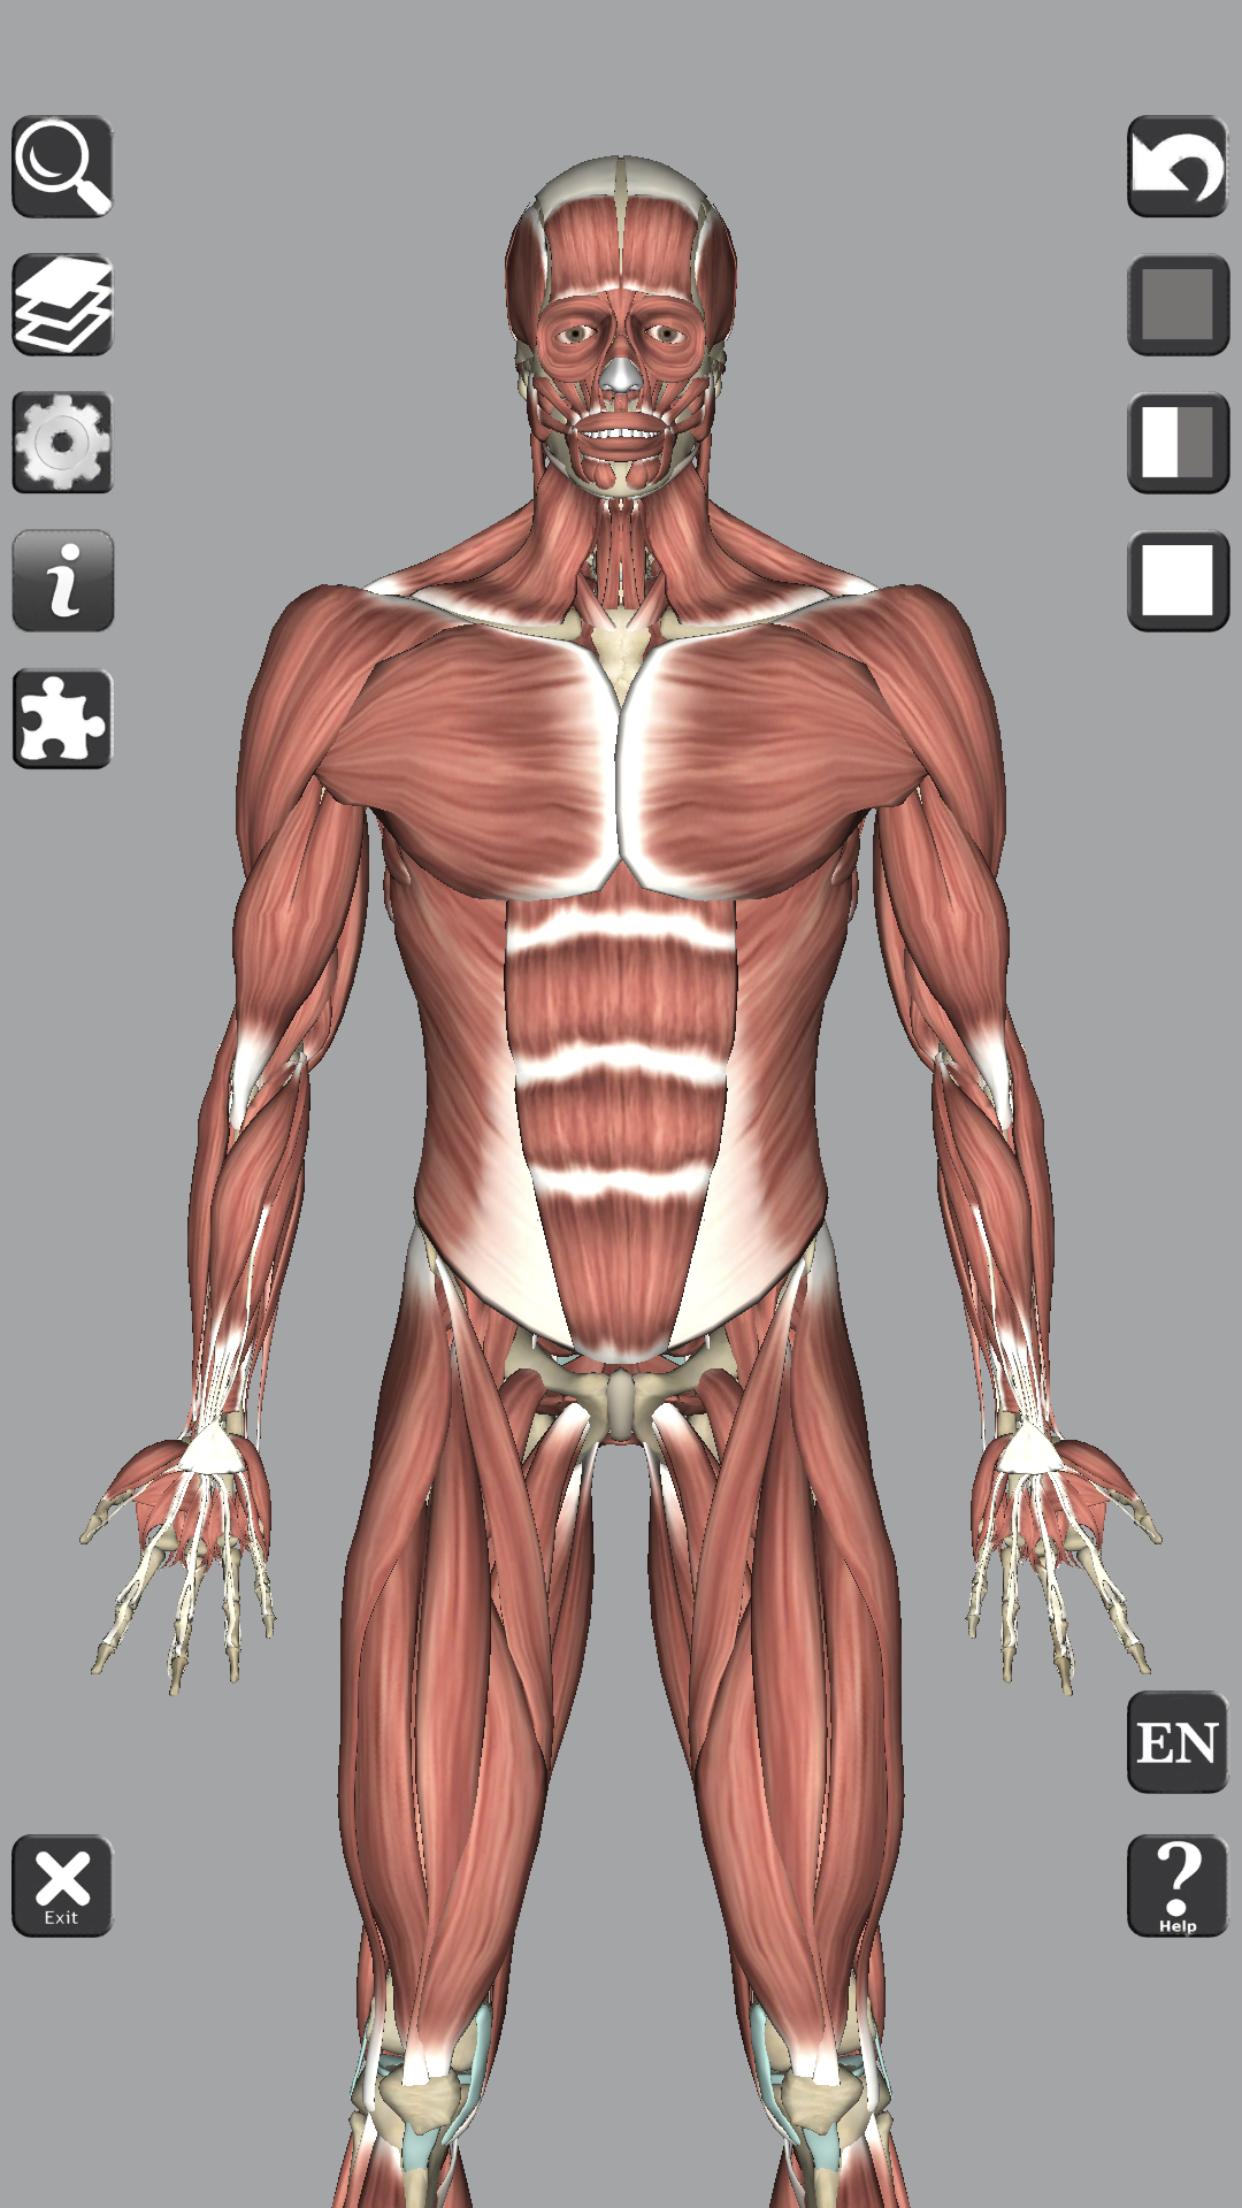 3D Bones and Organs (Anatomy) 4.1 Screenshot 2